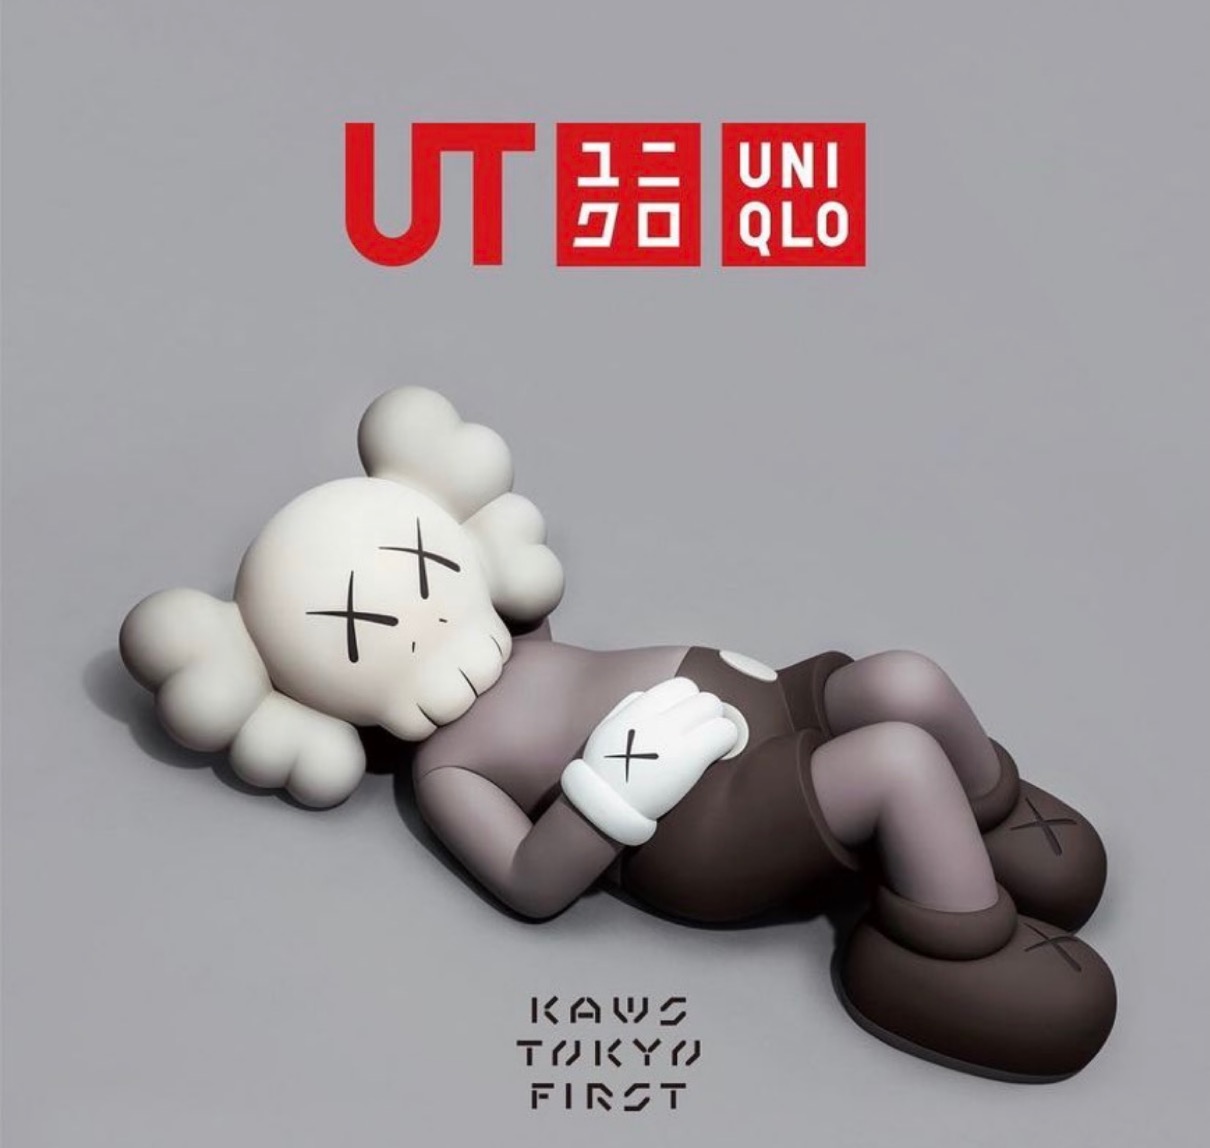 Kaws Tokyo First Uniqlo Ut コラボコレクションが国内7月16日 7月30日に発売予定 Up To Date